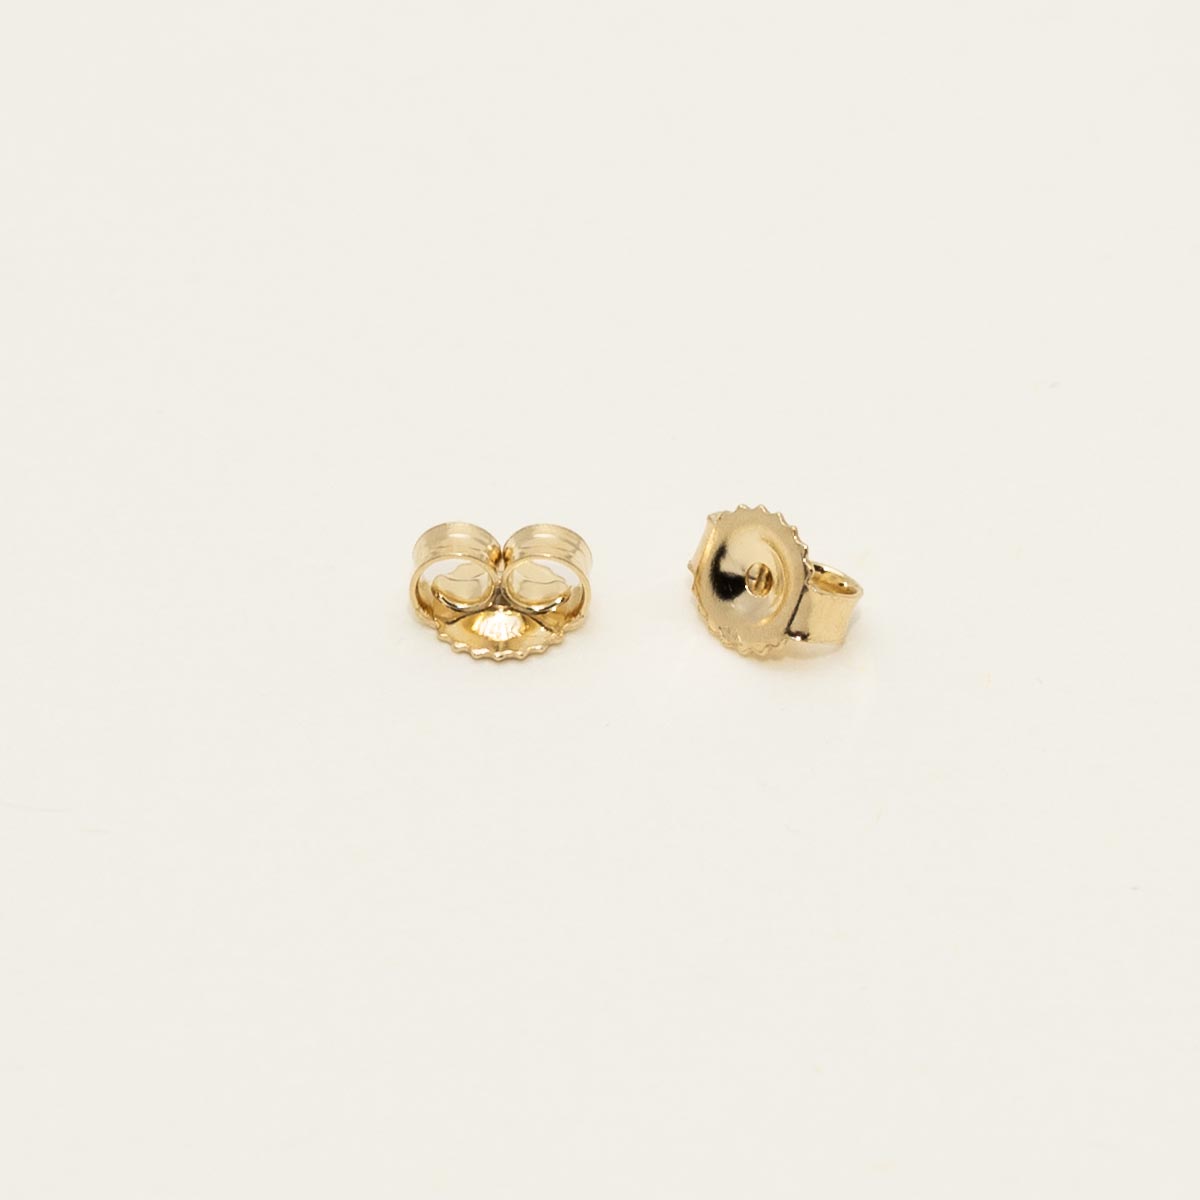 Mastoloni Cultured Akoya Pearl Stud Earrings in 14kt Yellow Gold (6.5-7mm pearls)